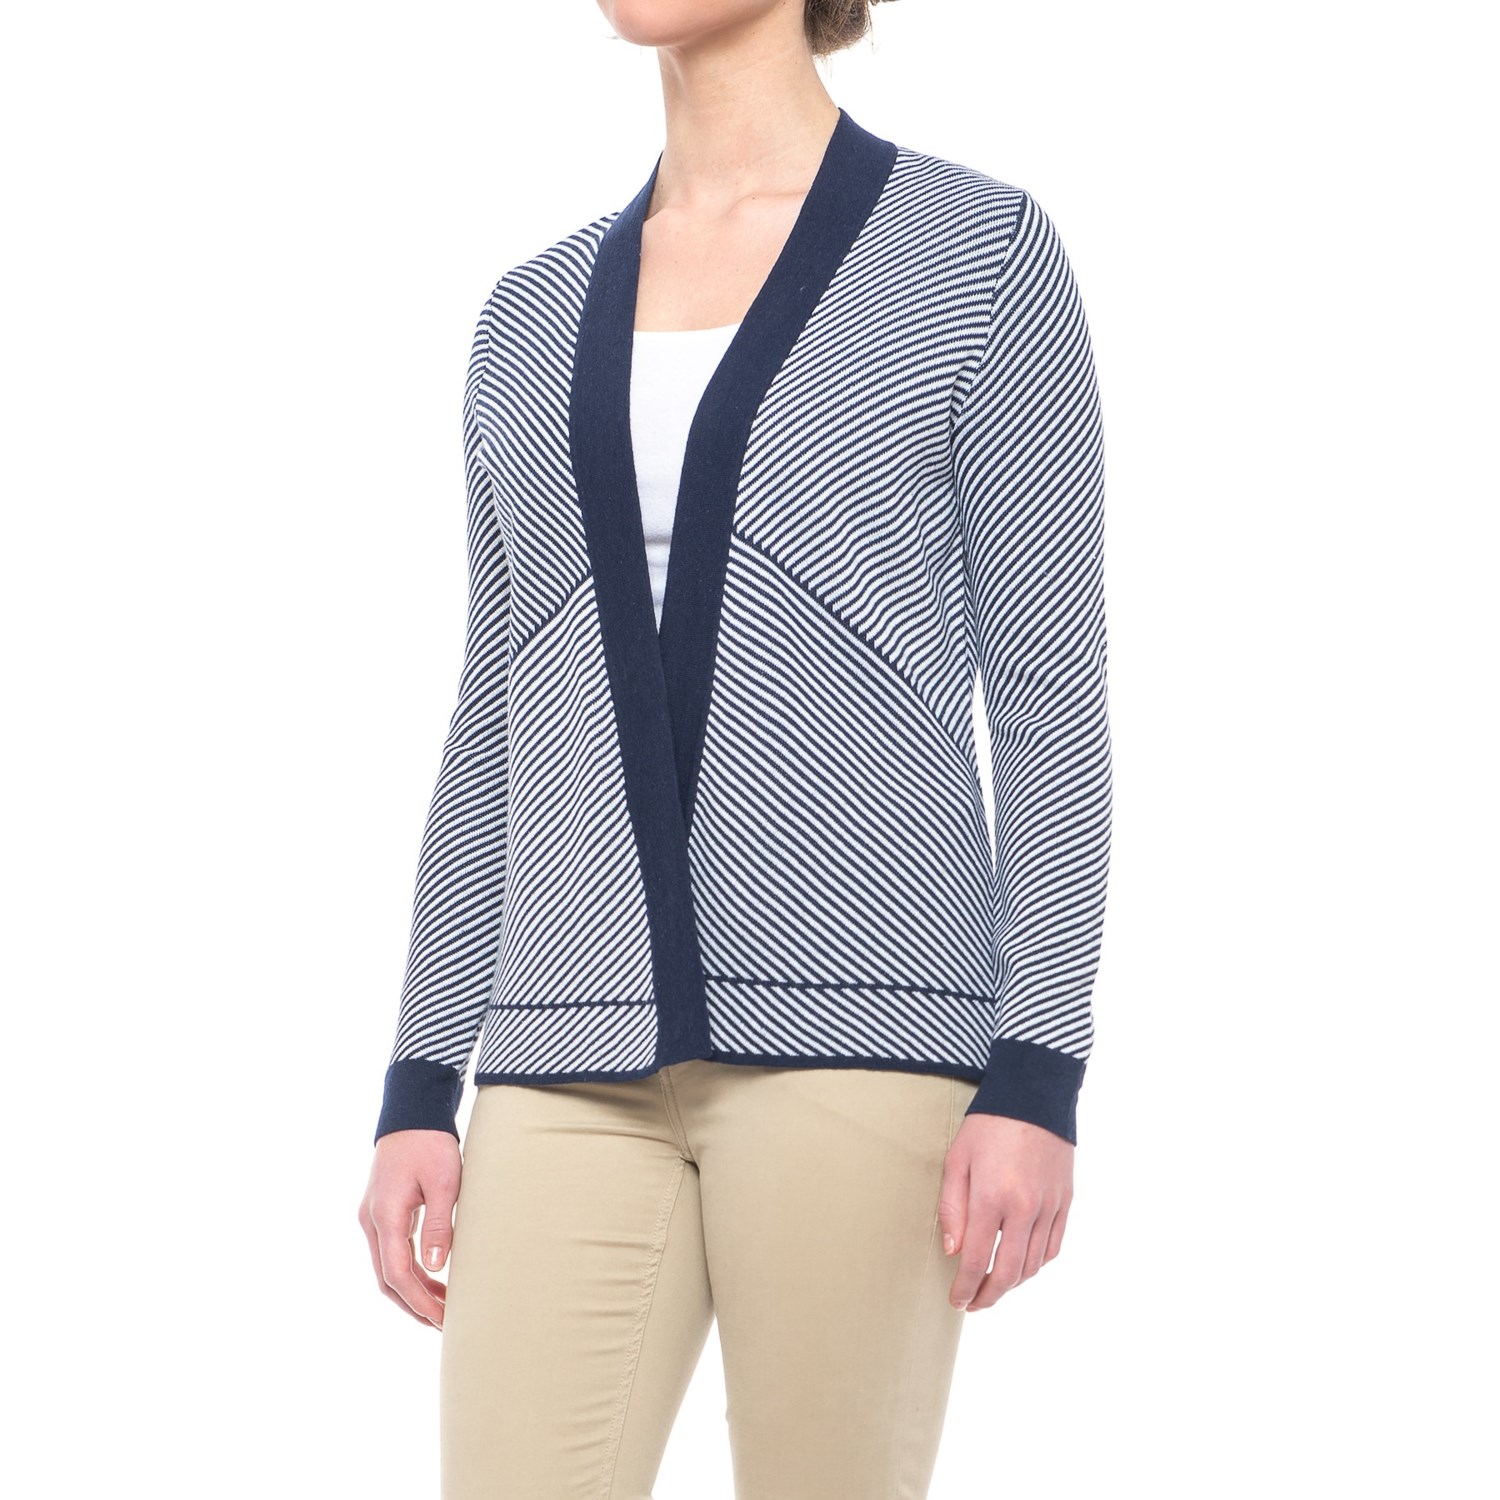 Foxcroft Daphne Cardigan Sweater (For Women) - Save 63%